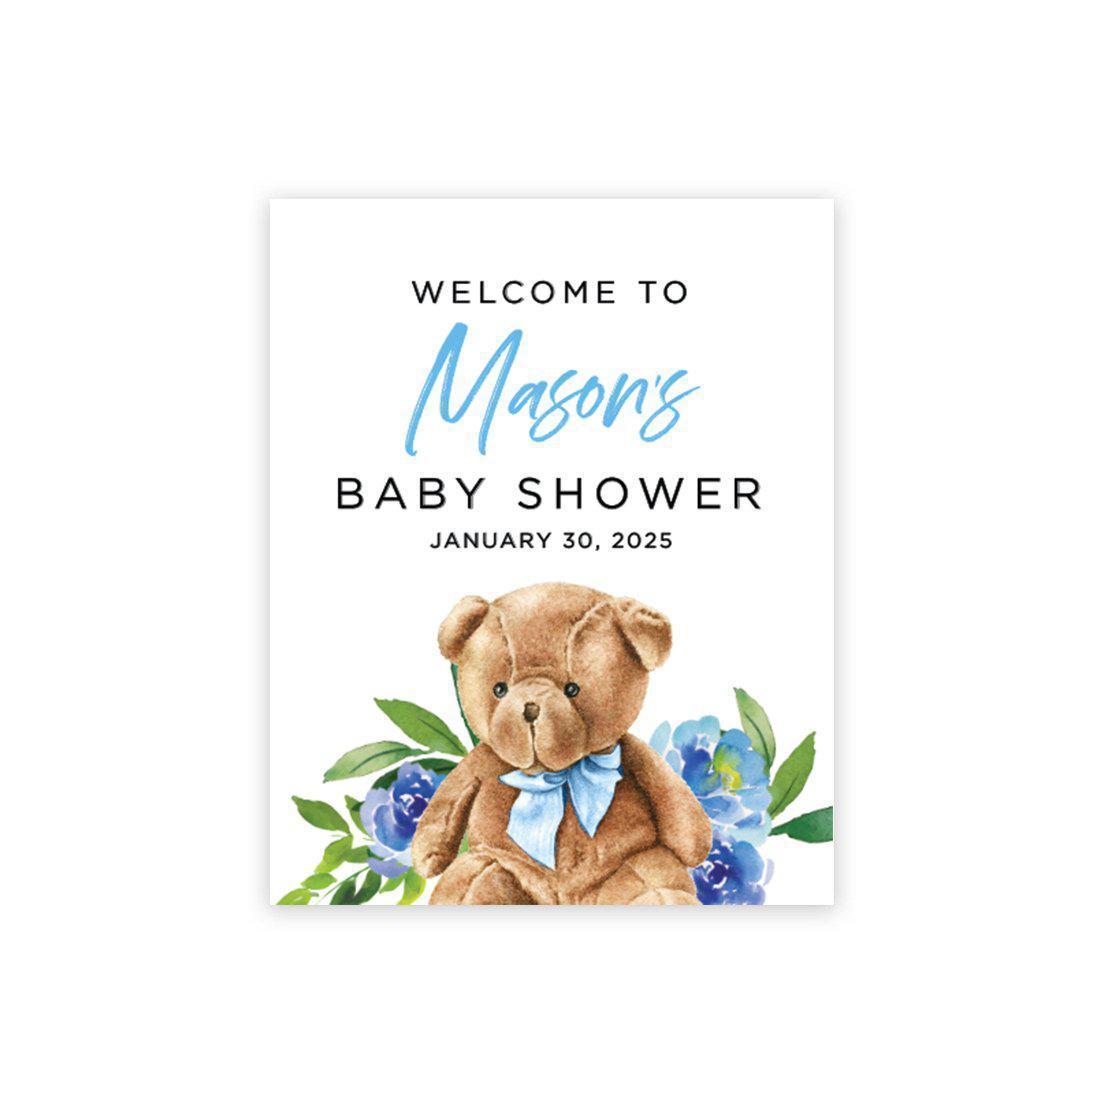 Hello Baby Custom Baby Shower Welcome Sign Koyal Wholesale Customize: Yes